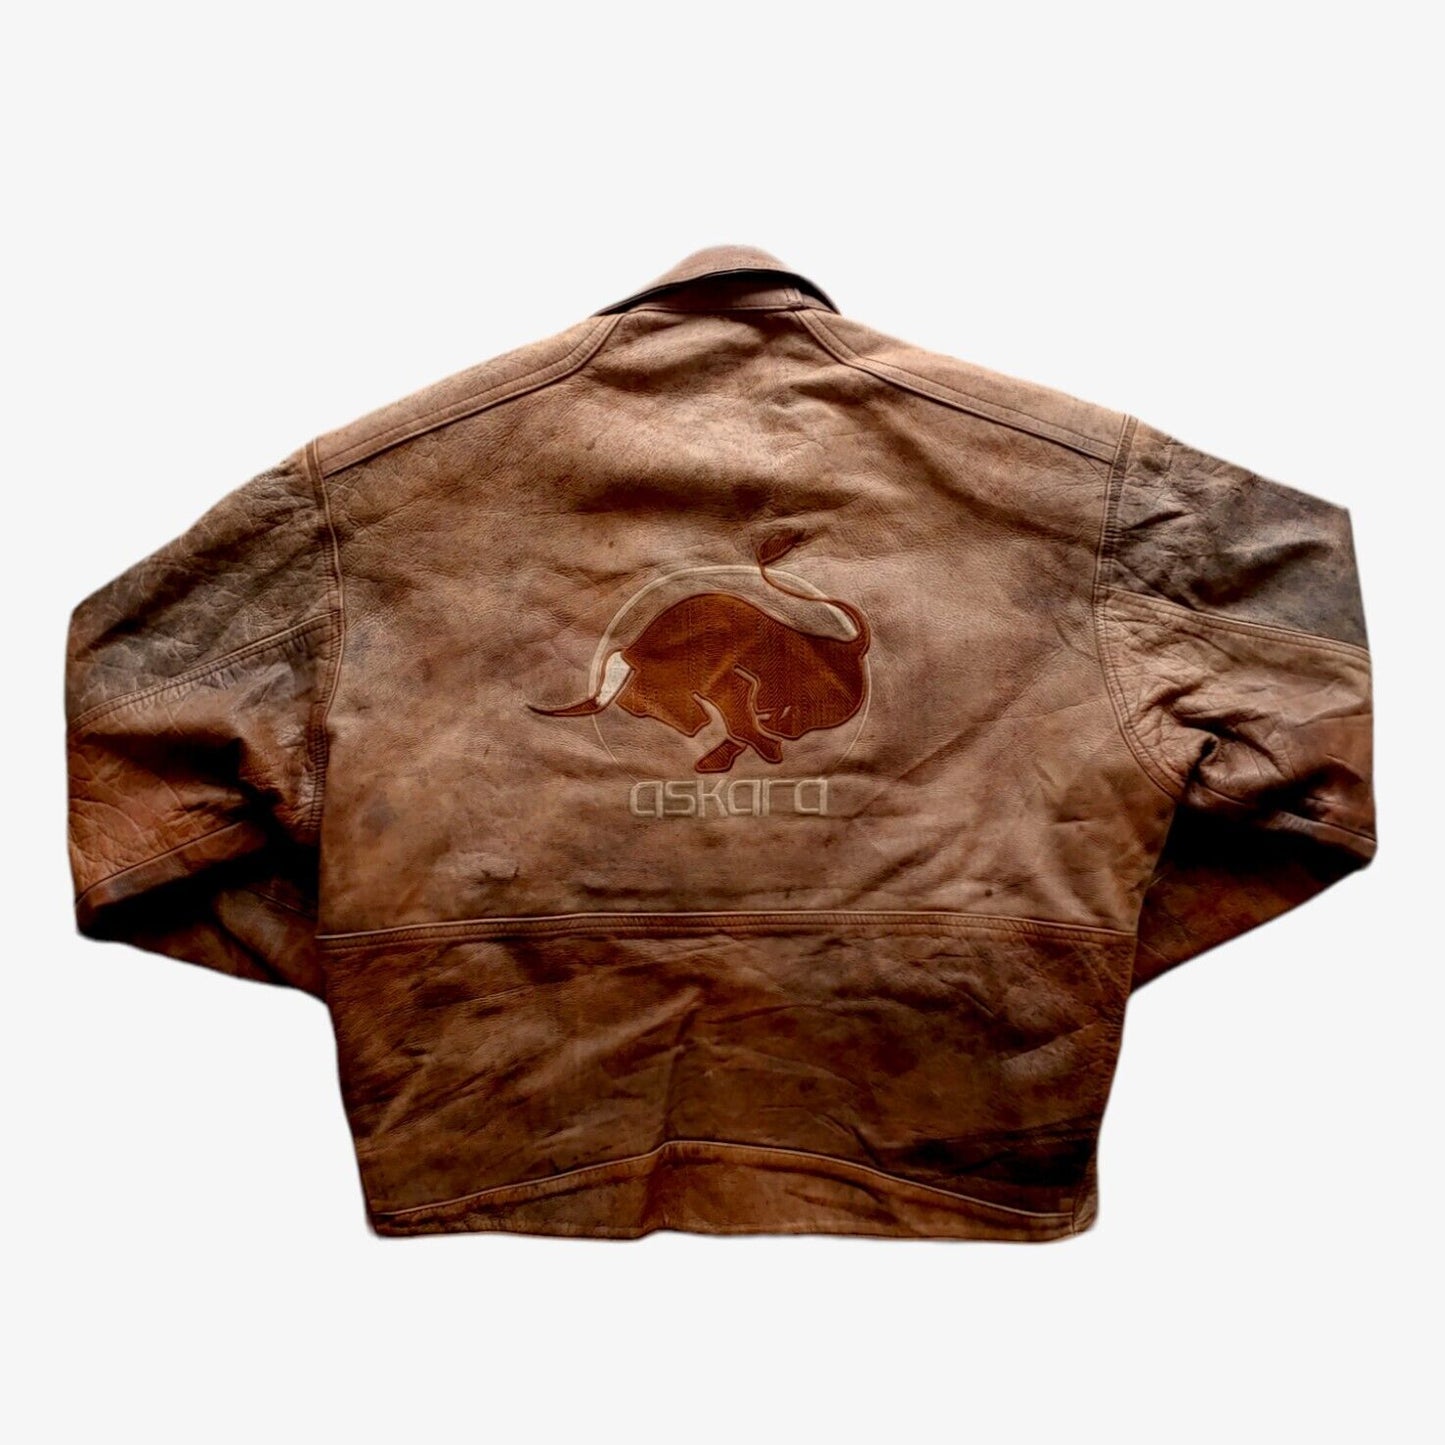 Vintage 1990s Askara Paris Leather Biker Jacket With Big Back Embroidered Bull - Casspios Dream